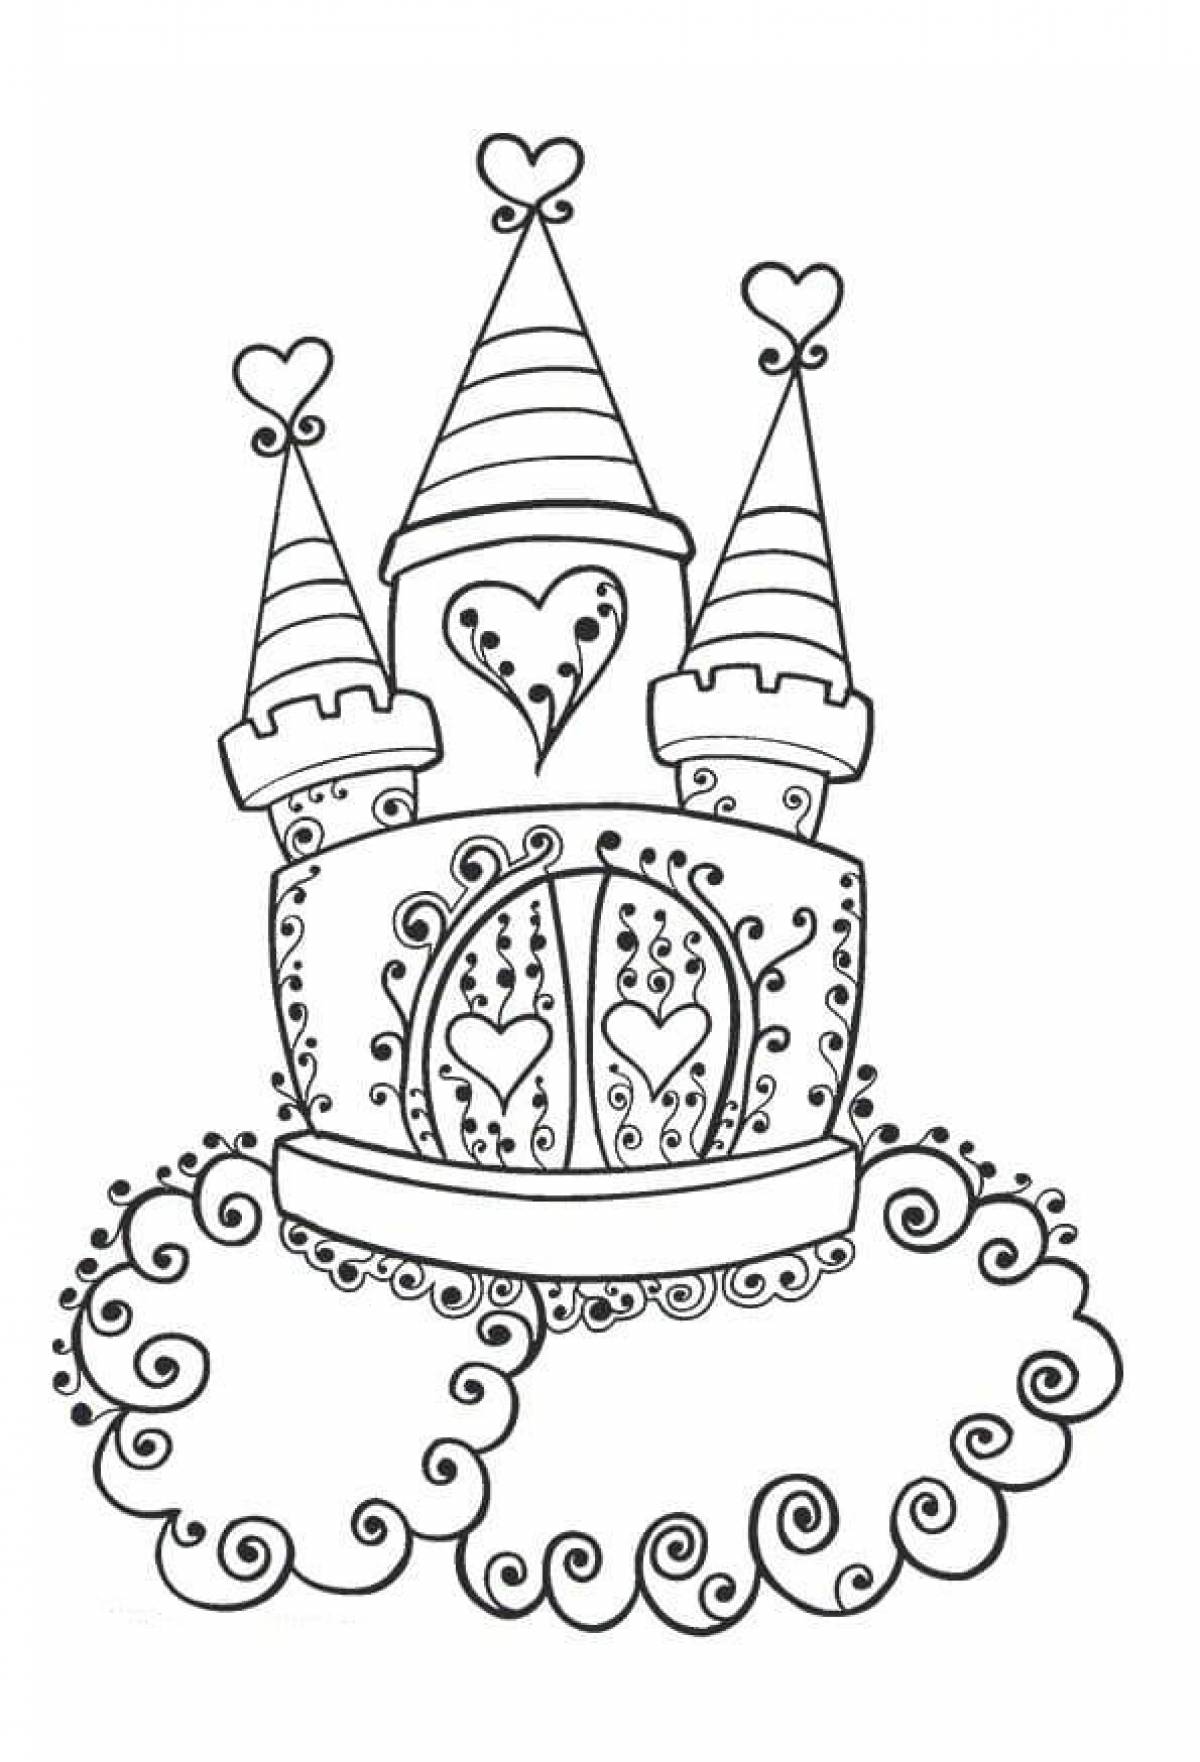 Exquisite princess castle coloring book